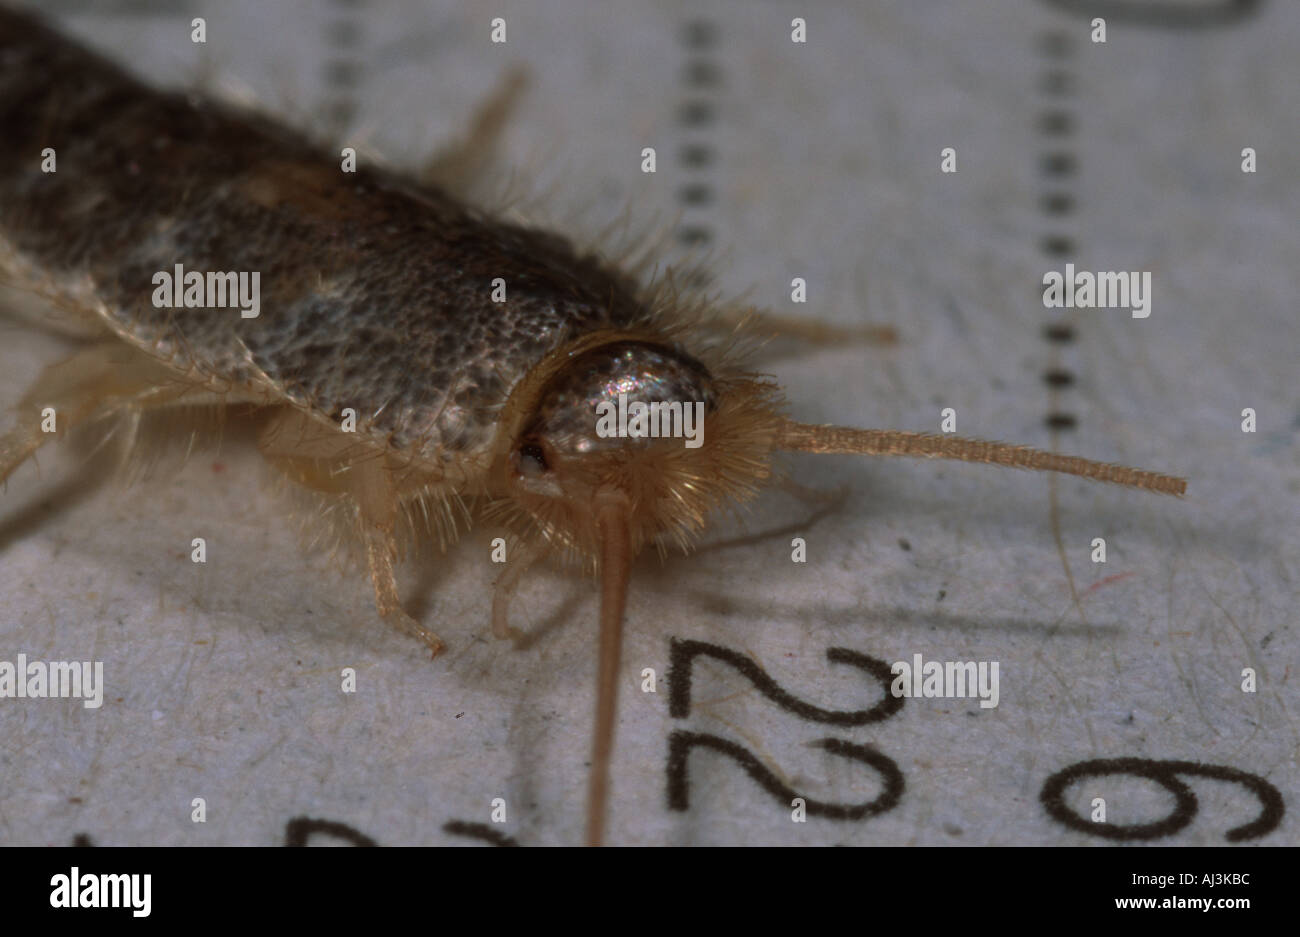 Lepisma saccharina primitive insect on newspaper portrait Stock Photo